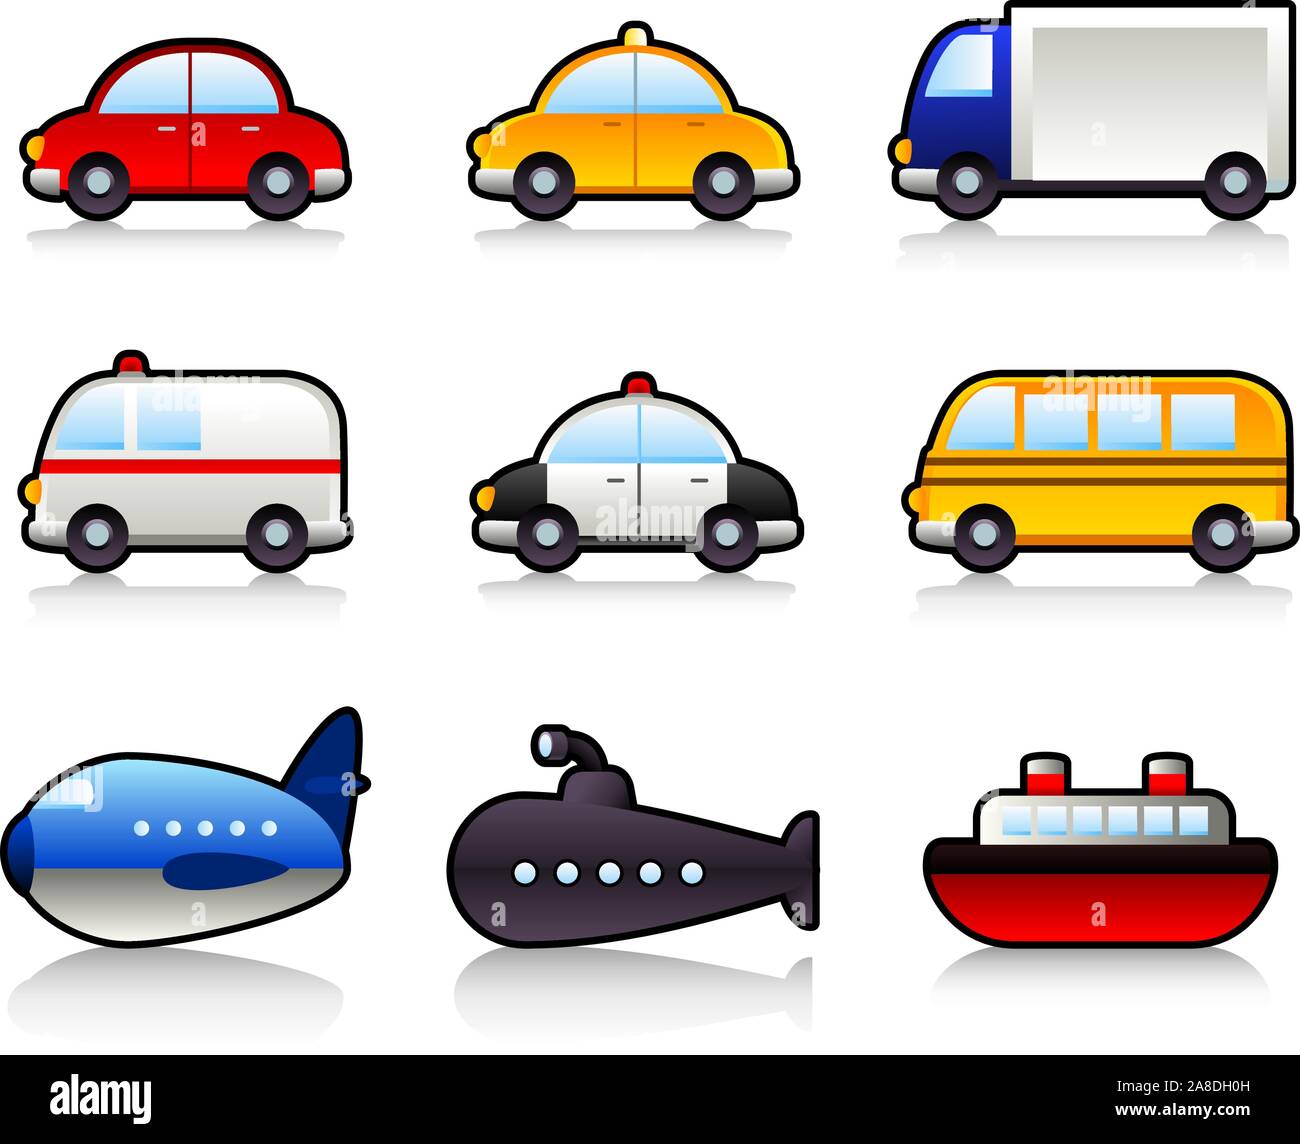 Transportmittel: mit dem Auto, Taxi, LKW, LKW, Bus, Polizeiauto, Krankenwagen, Schulbus, u-Boot, Flugzeug, Schiff. Vektor-Illustration-Cartoon. Stock Vektor